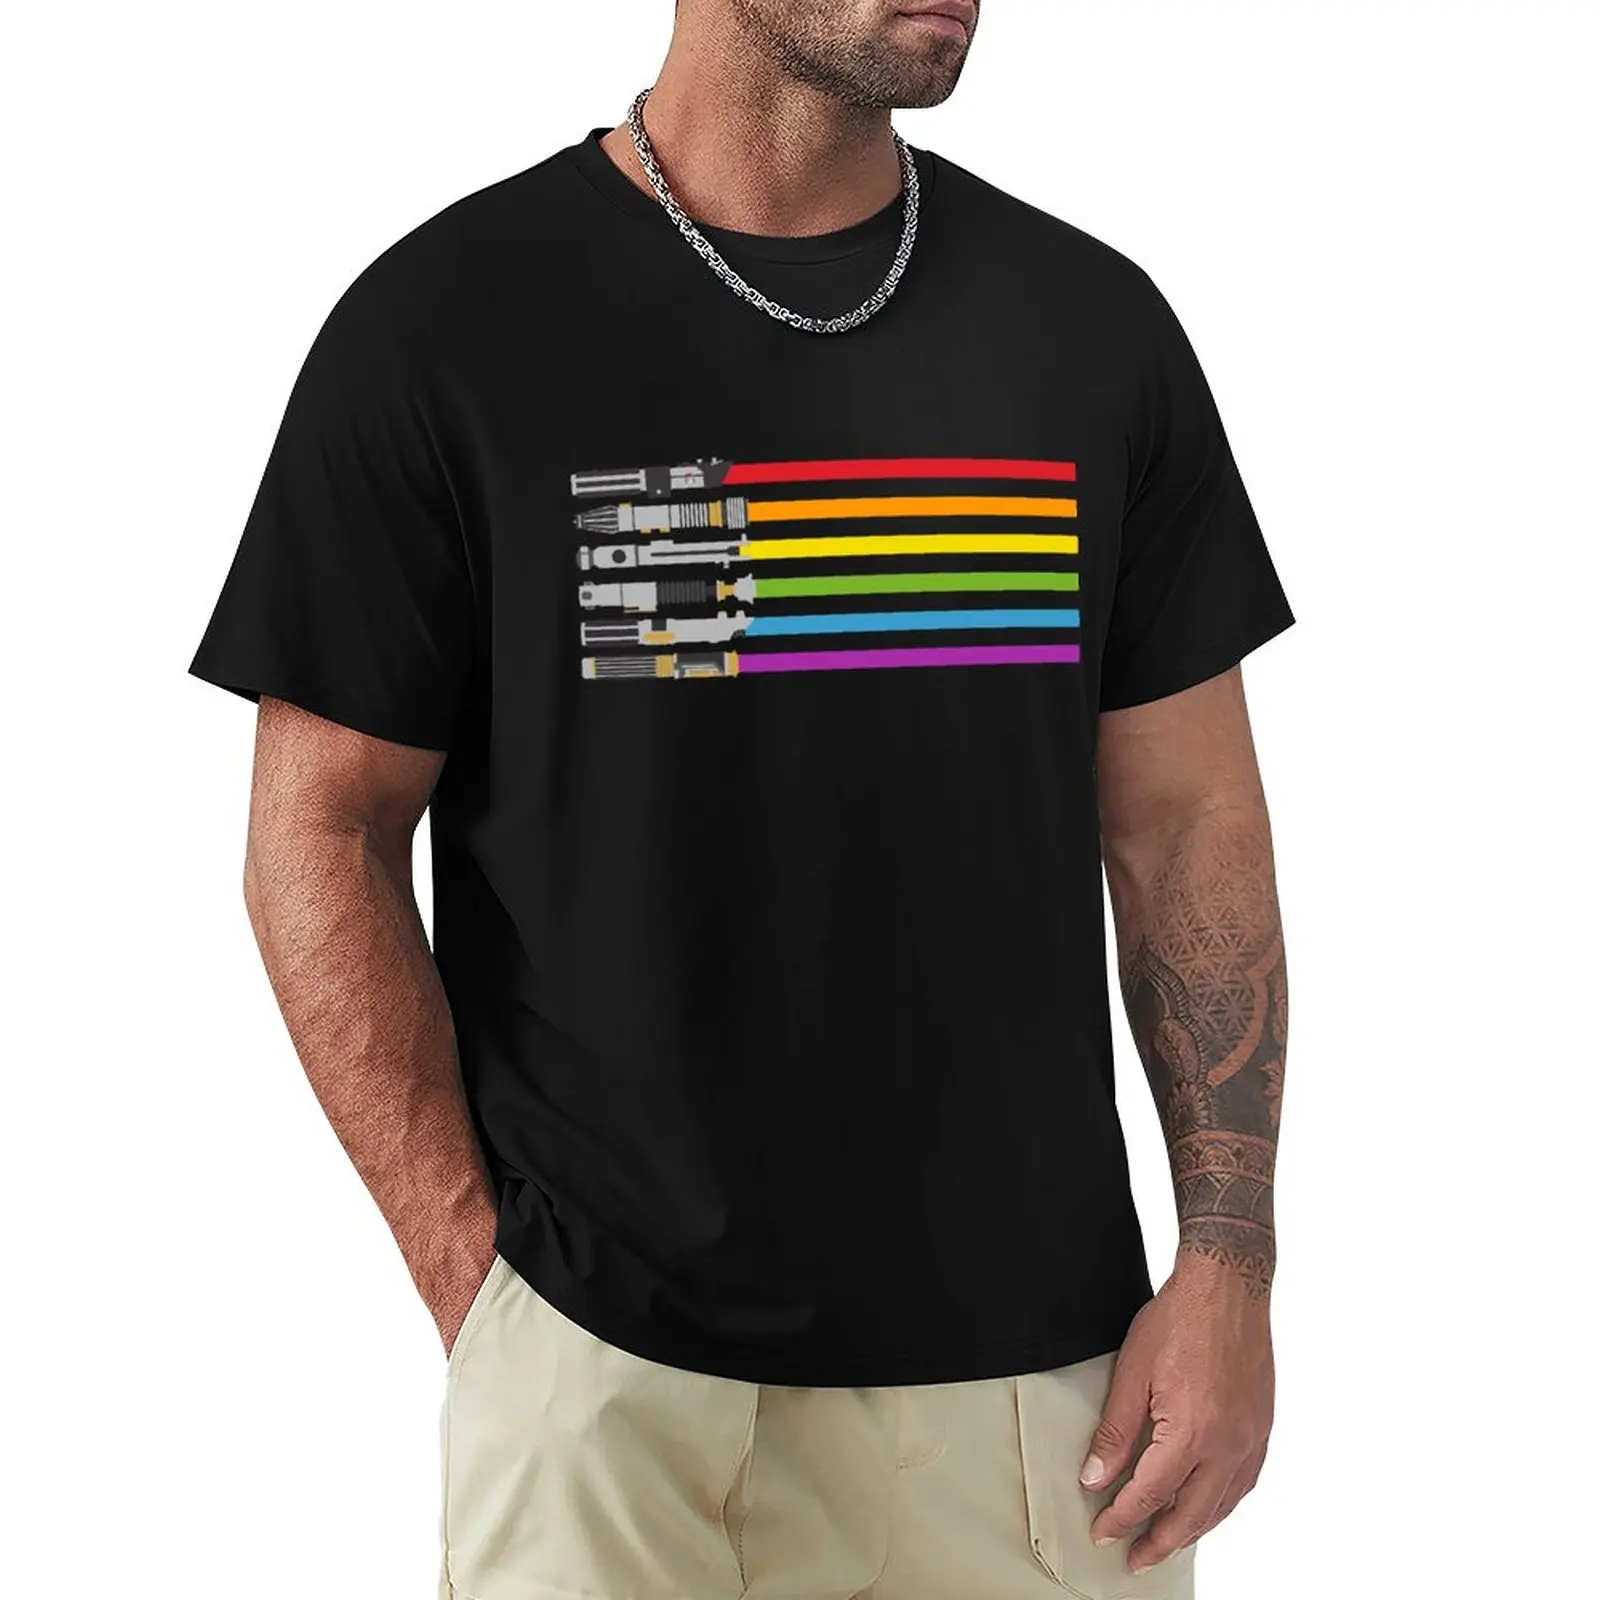 

Lightsaber Rainbow T-Shirt animal prinfor boys summer clothes customs design your own plain white t shirts men